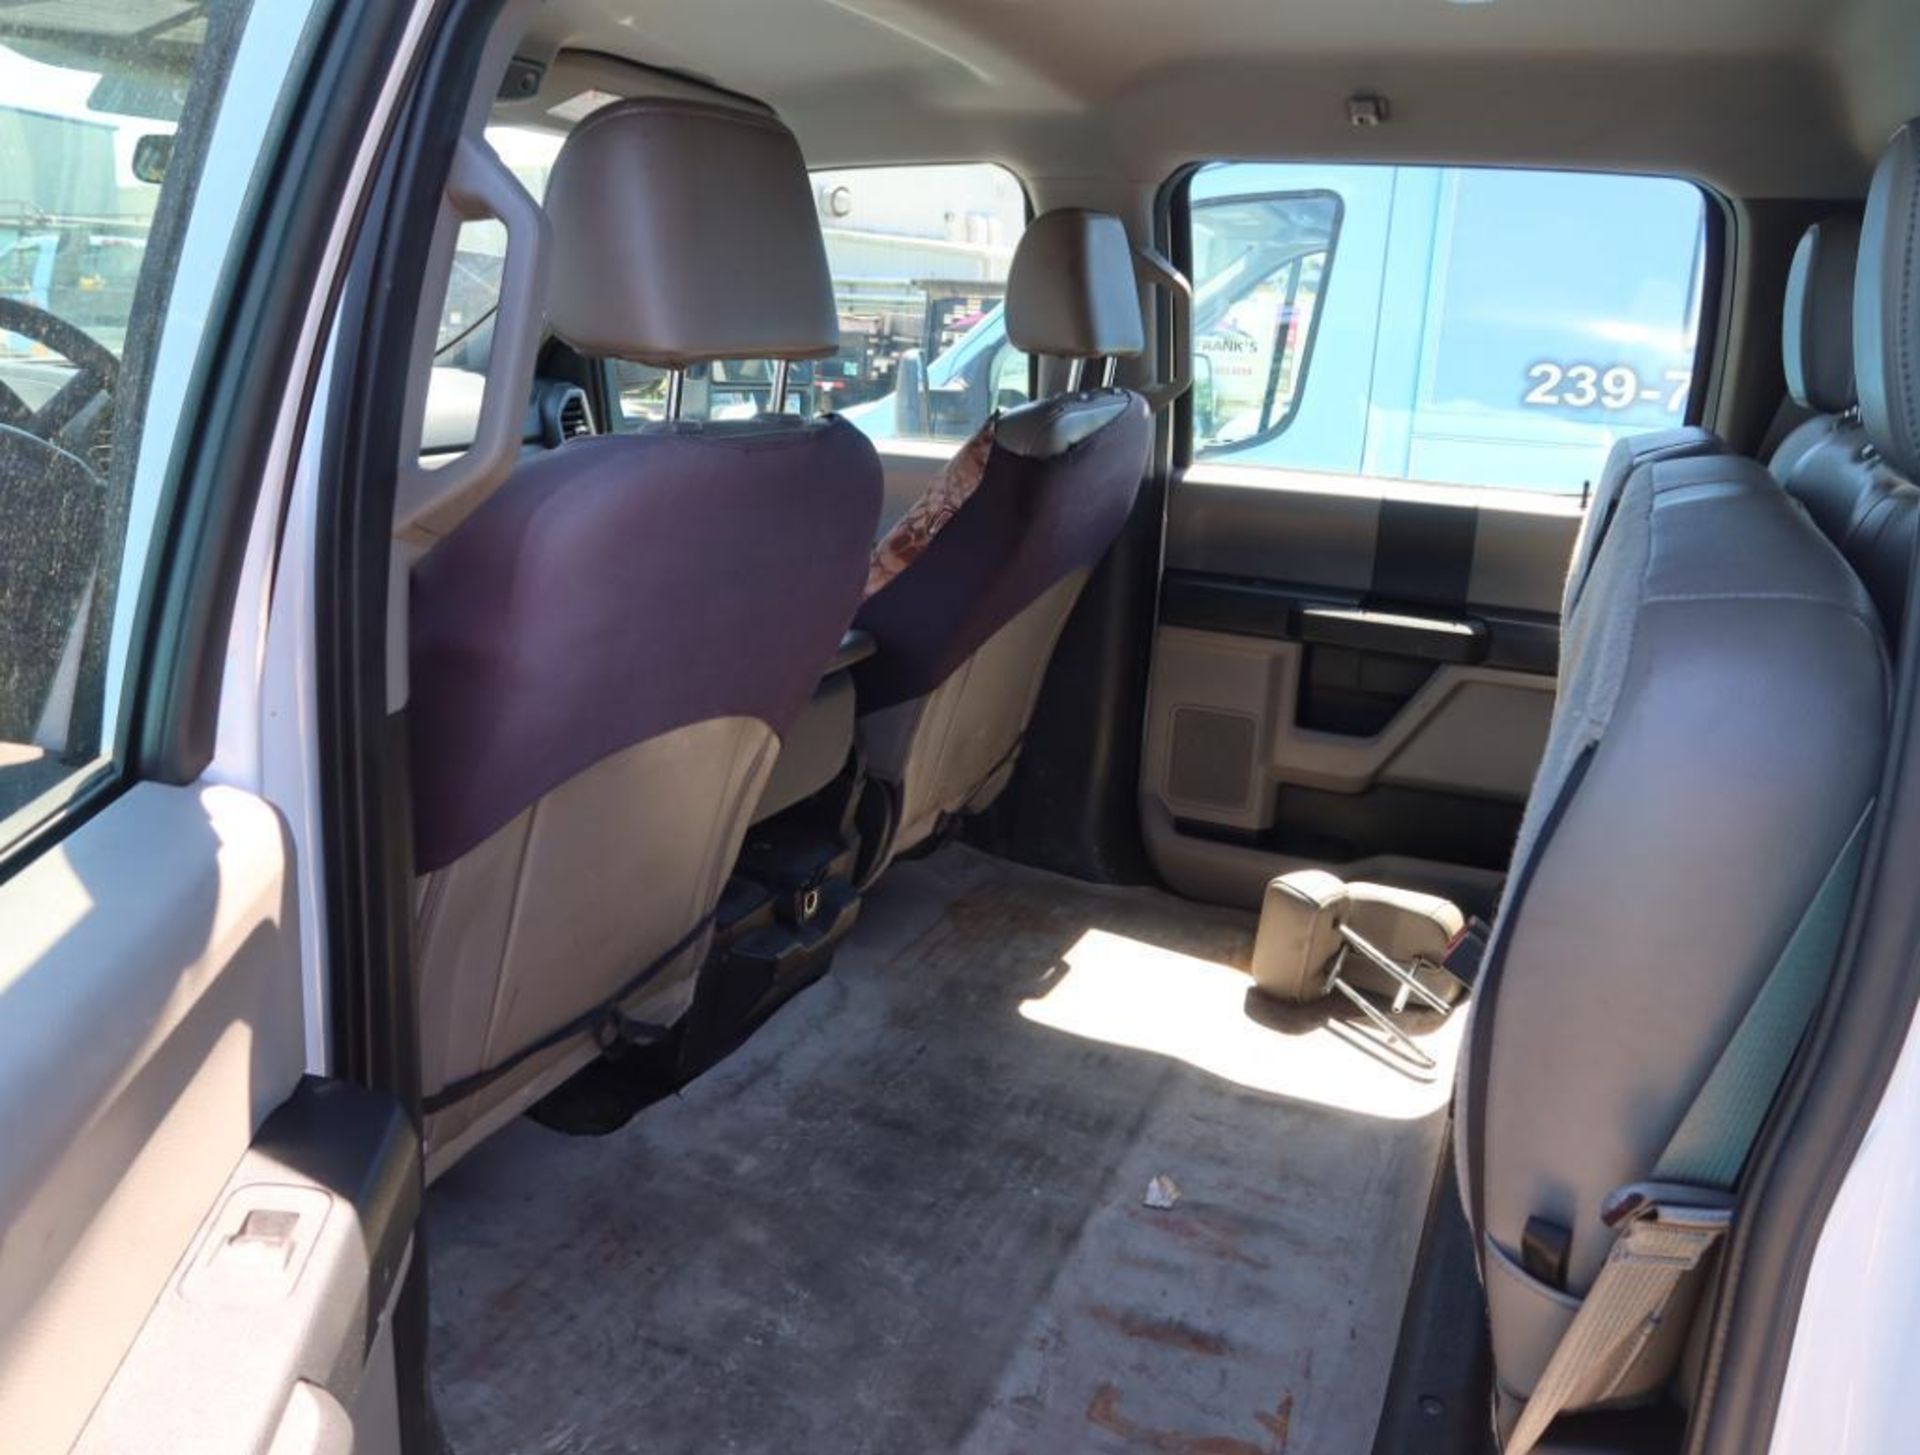 2019 Ford 4WD Crew Cab F-550 Super Duty Flat Bed, Dual Wheel w/Tool Box, Diesel, License# NPW-I96, V - Image 8 of 16